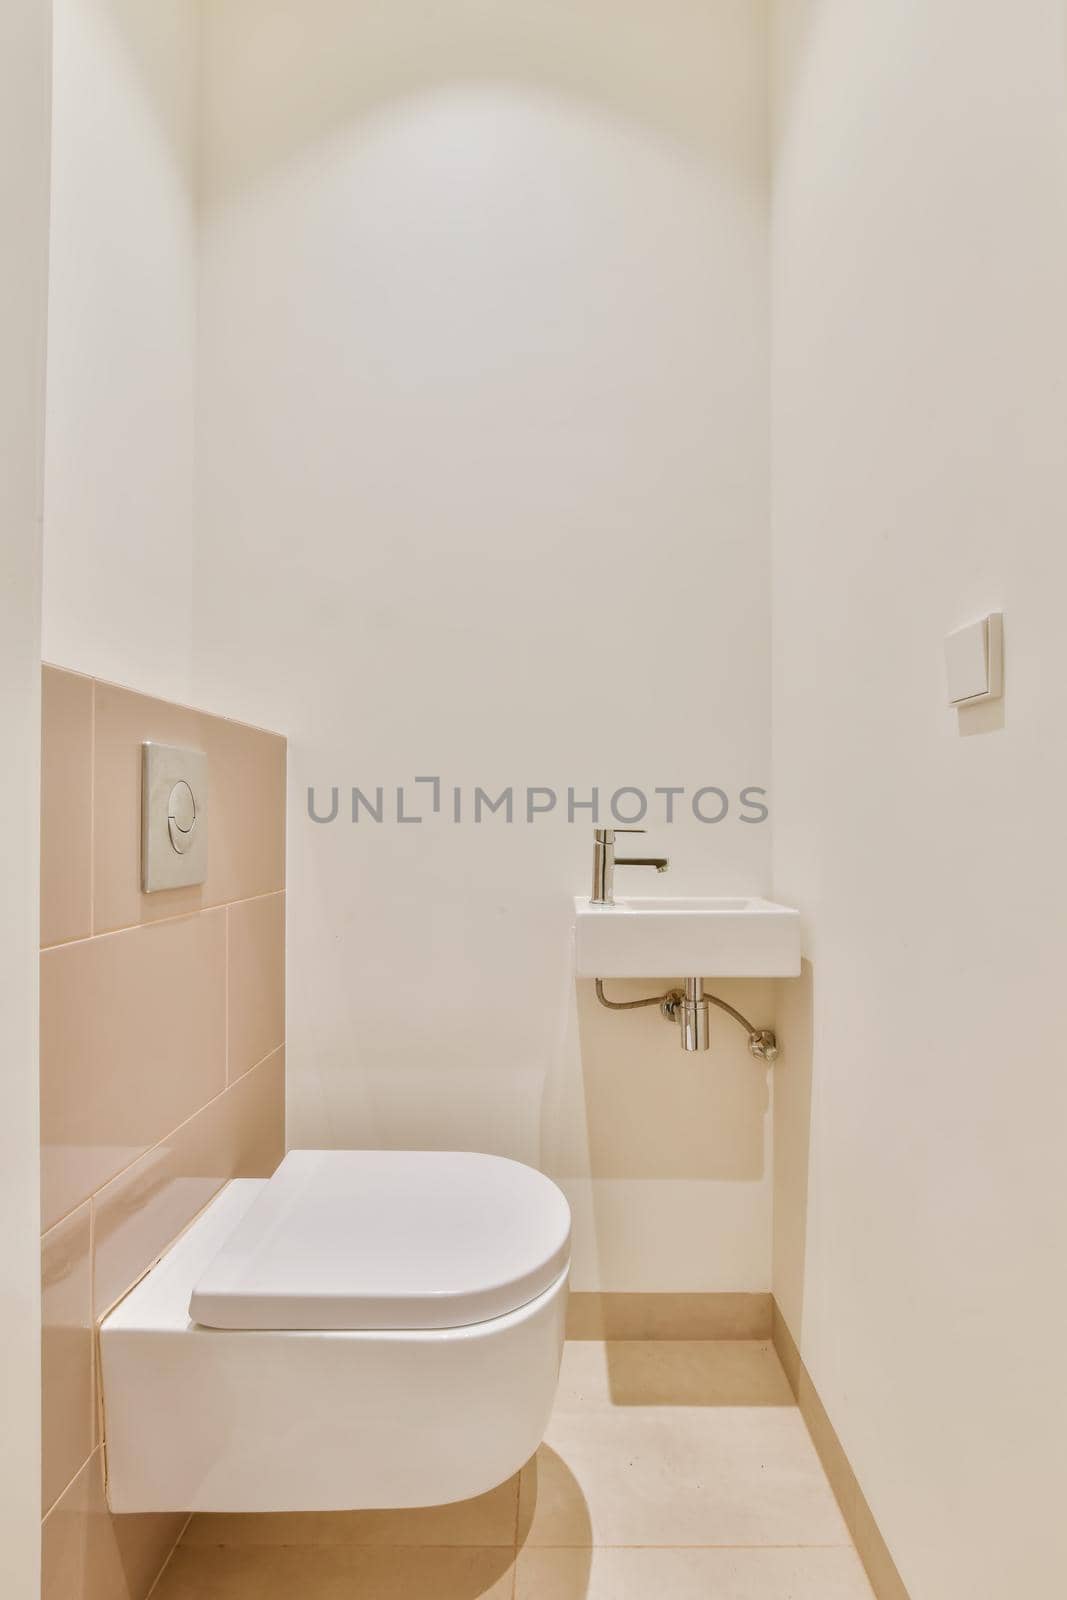 Luxurious washroom with beige tiled floor and miniature washbasin